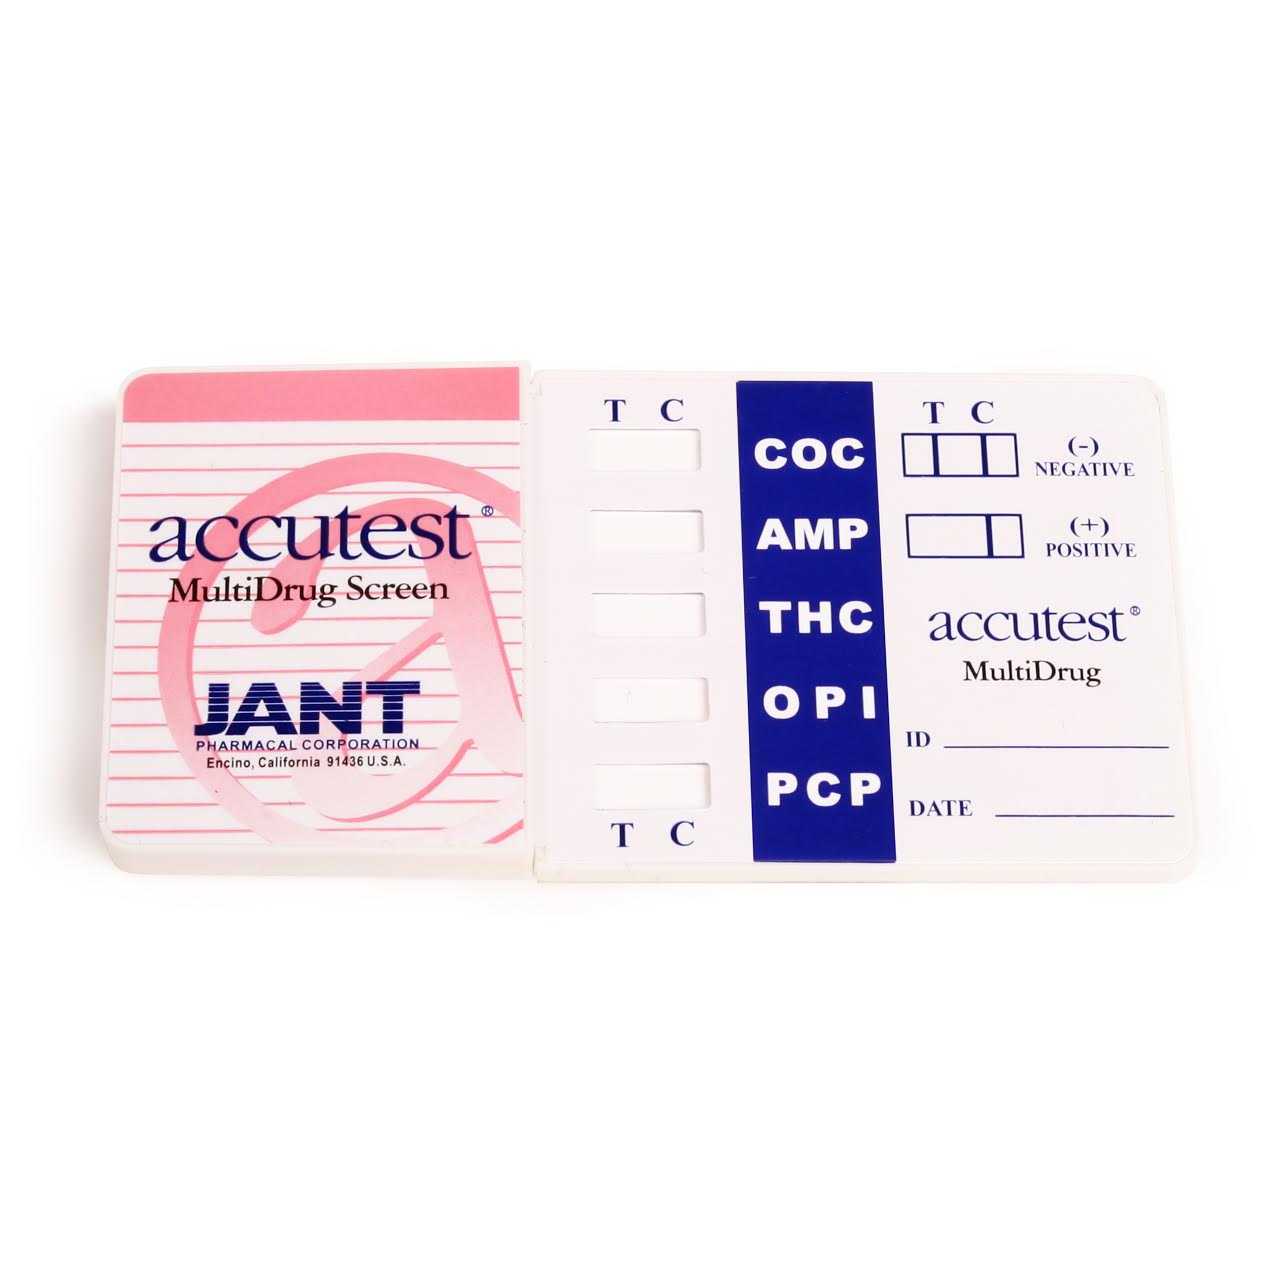 Accutest Urine Drug Test Dip Card - JANT PHARMACAL CORPORATION